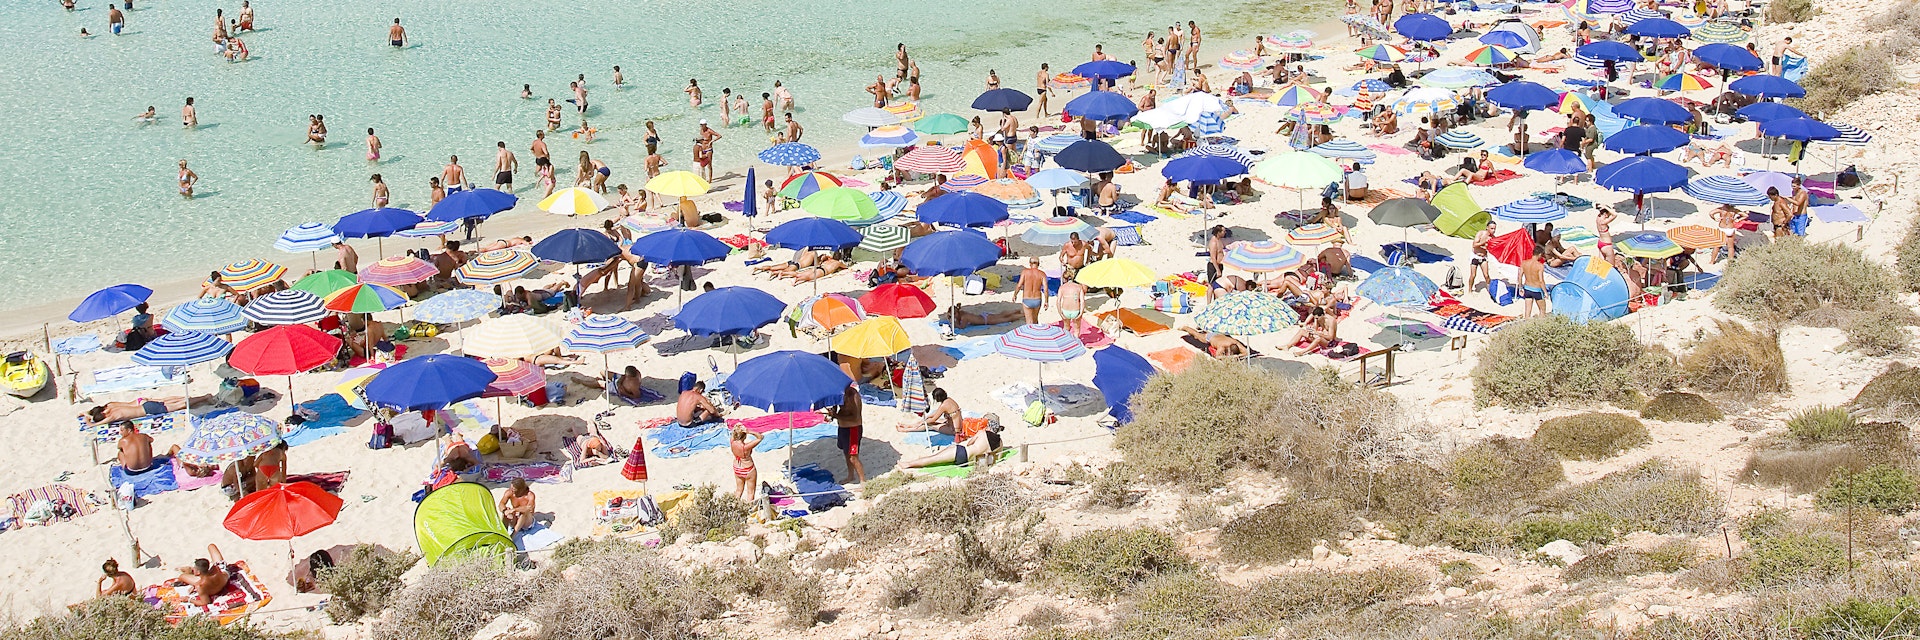 Tourists on the beach Spiaggia dei Conigli on Lampedusa, Sicily, Italy.